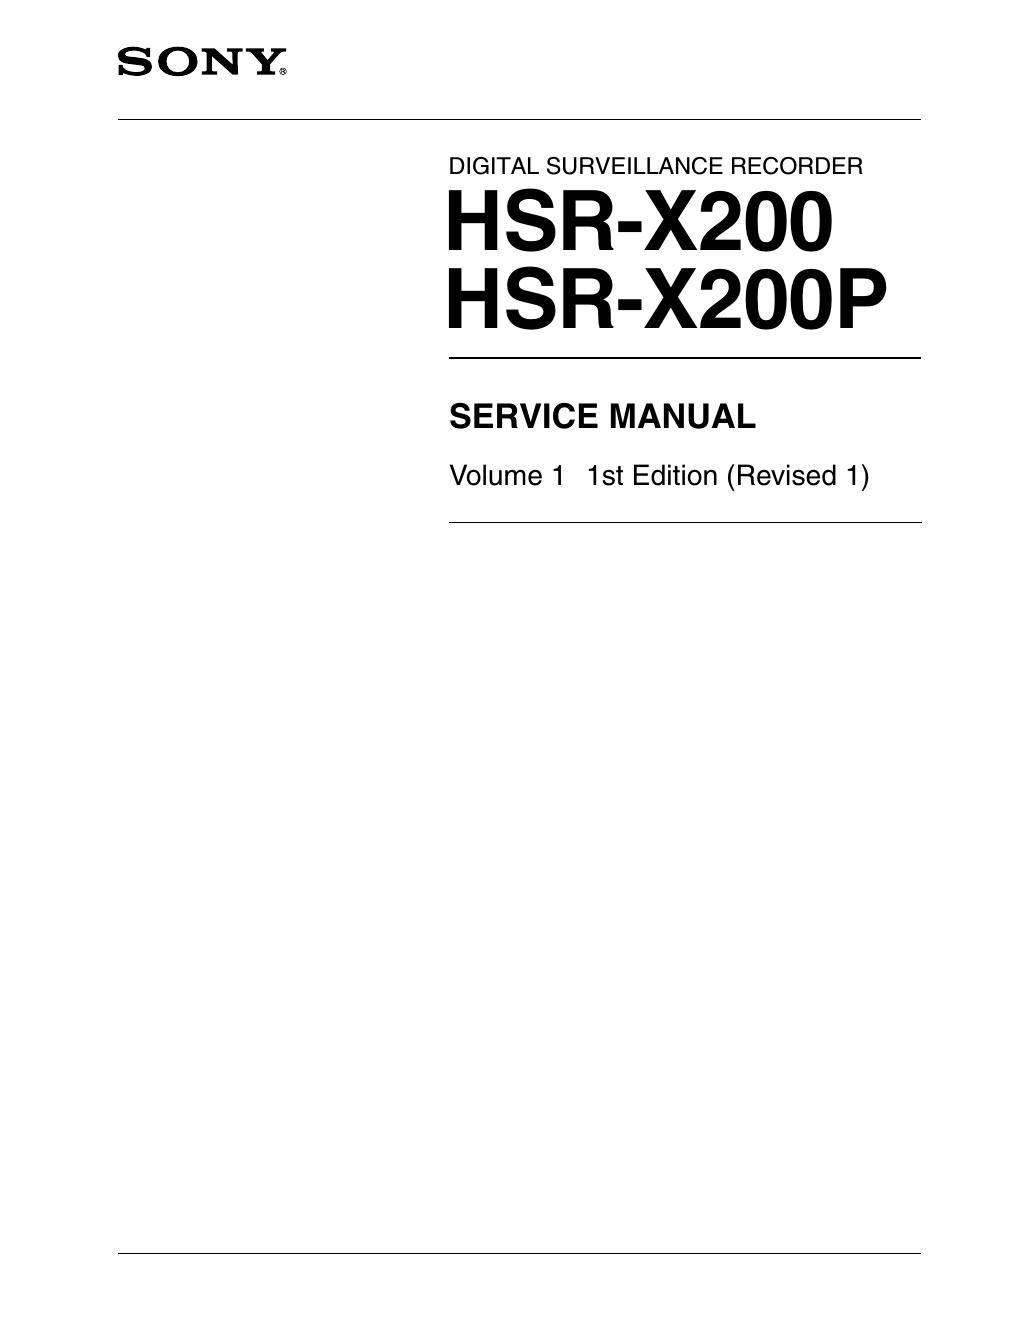 sony hsr x 200 service manual